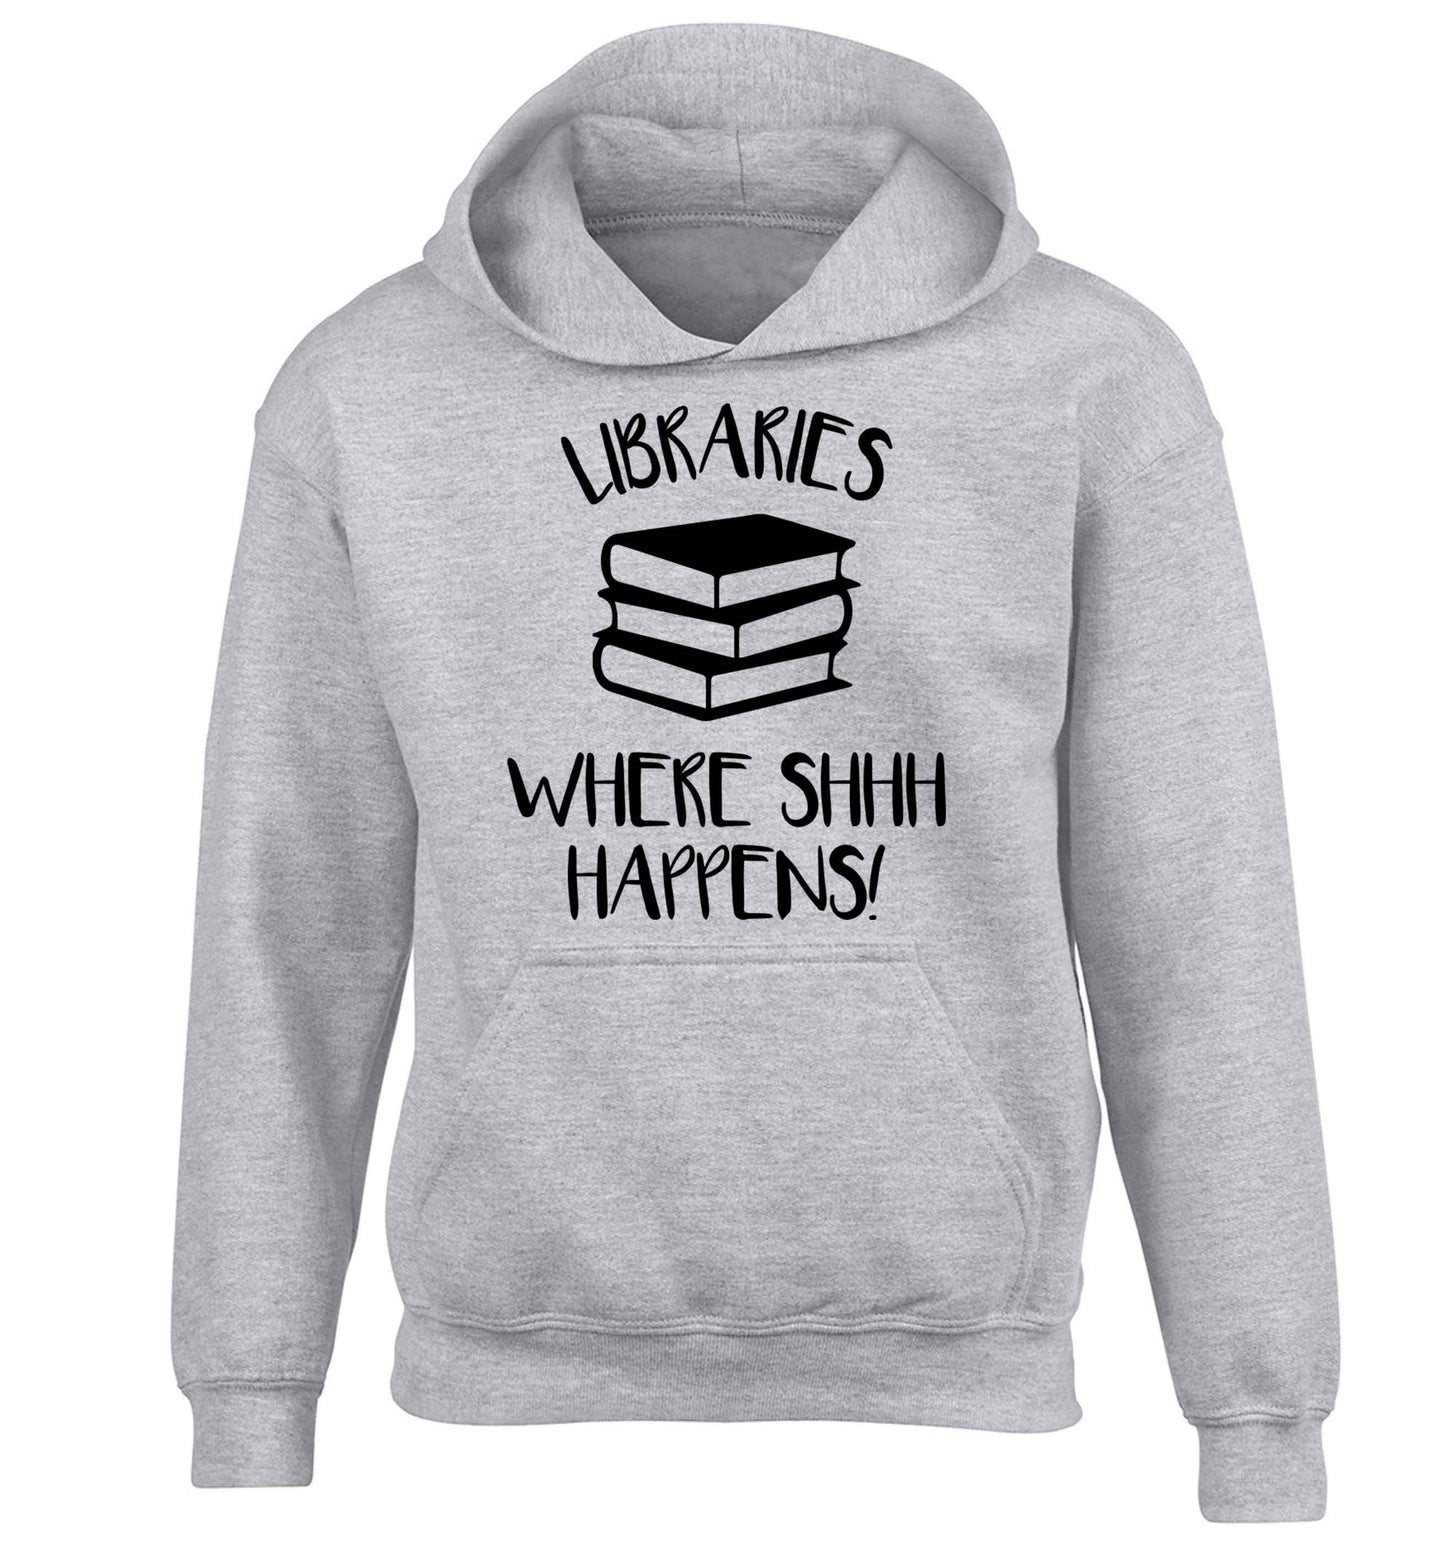 Libraries where shh happens! children's grey hoodie 12-13 Years